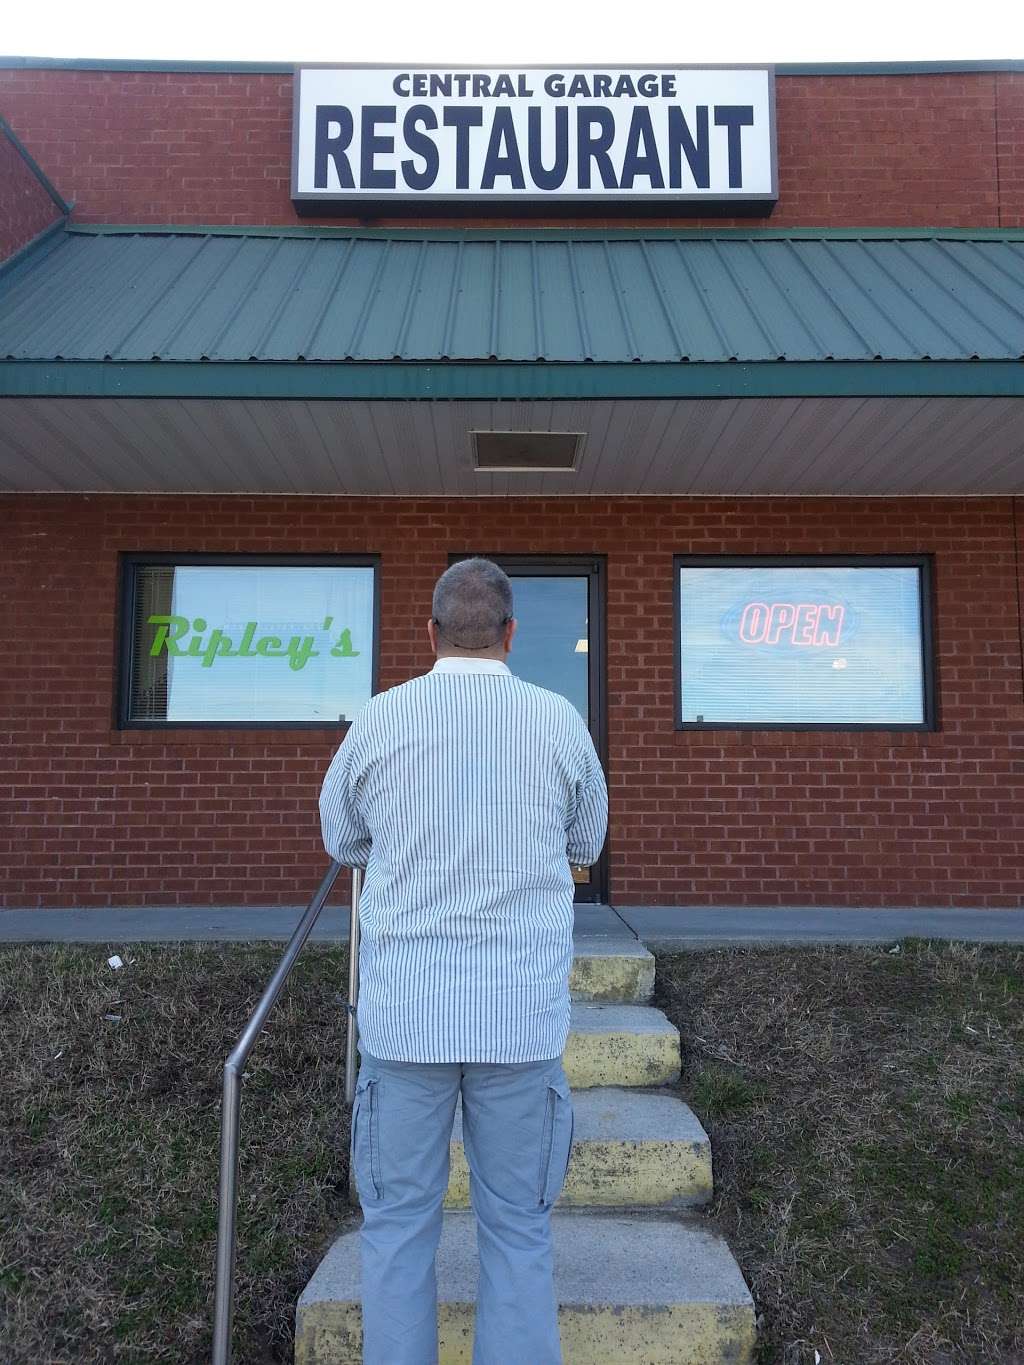 Ripley’s Family Restaurant | 694-M, Sharon Rd, King William, VA 23086, USA | Phone: (804) 769-1988